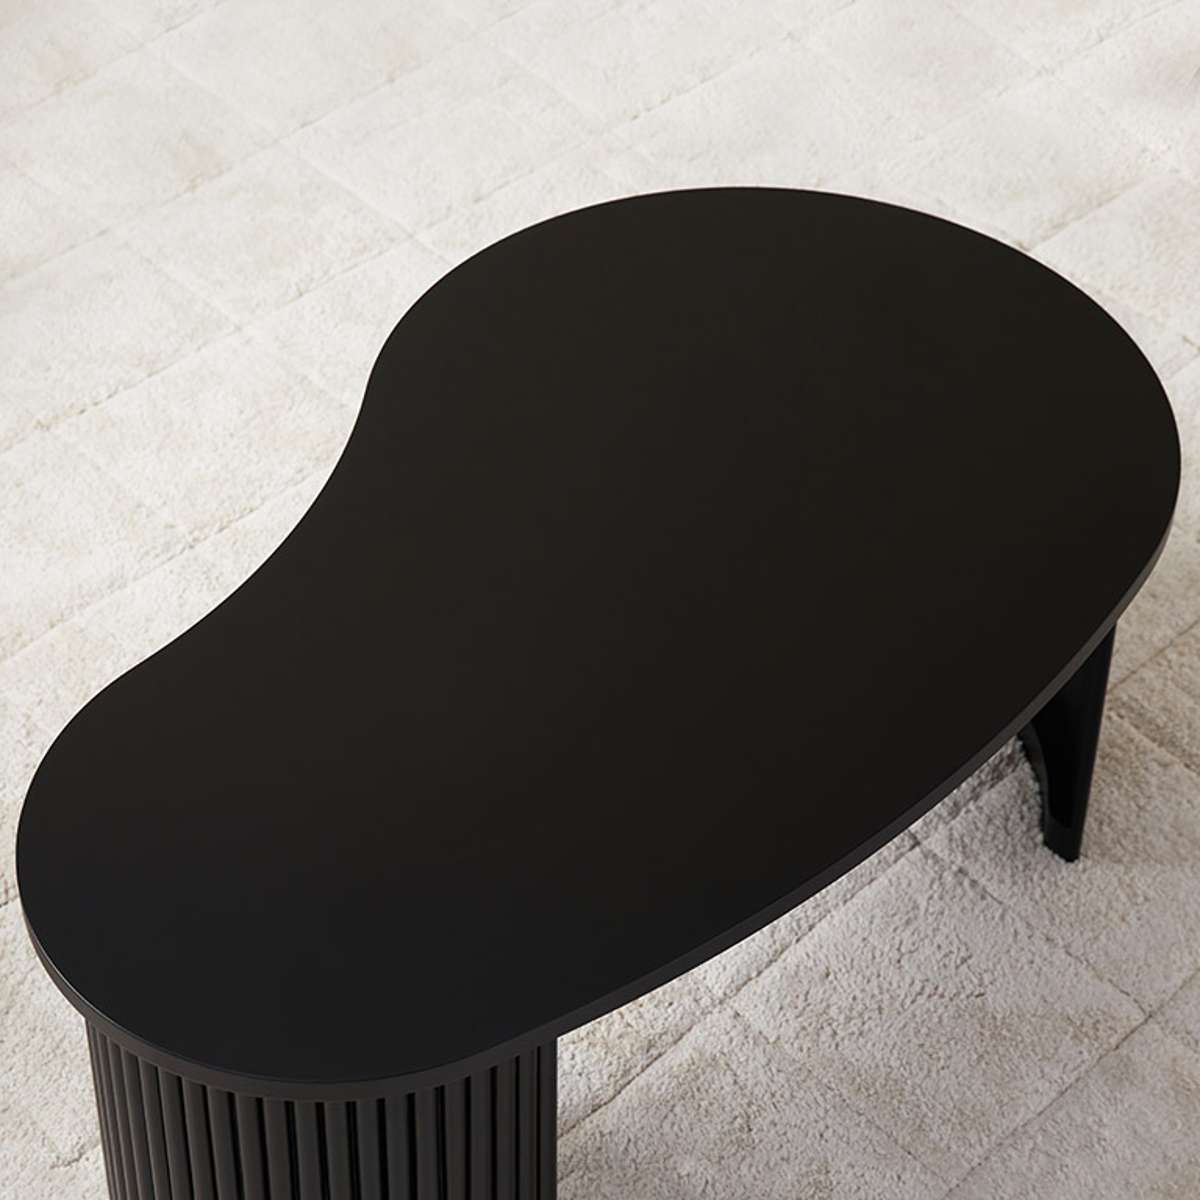 Eve Pebble Shaped Coffee Table - Black